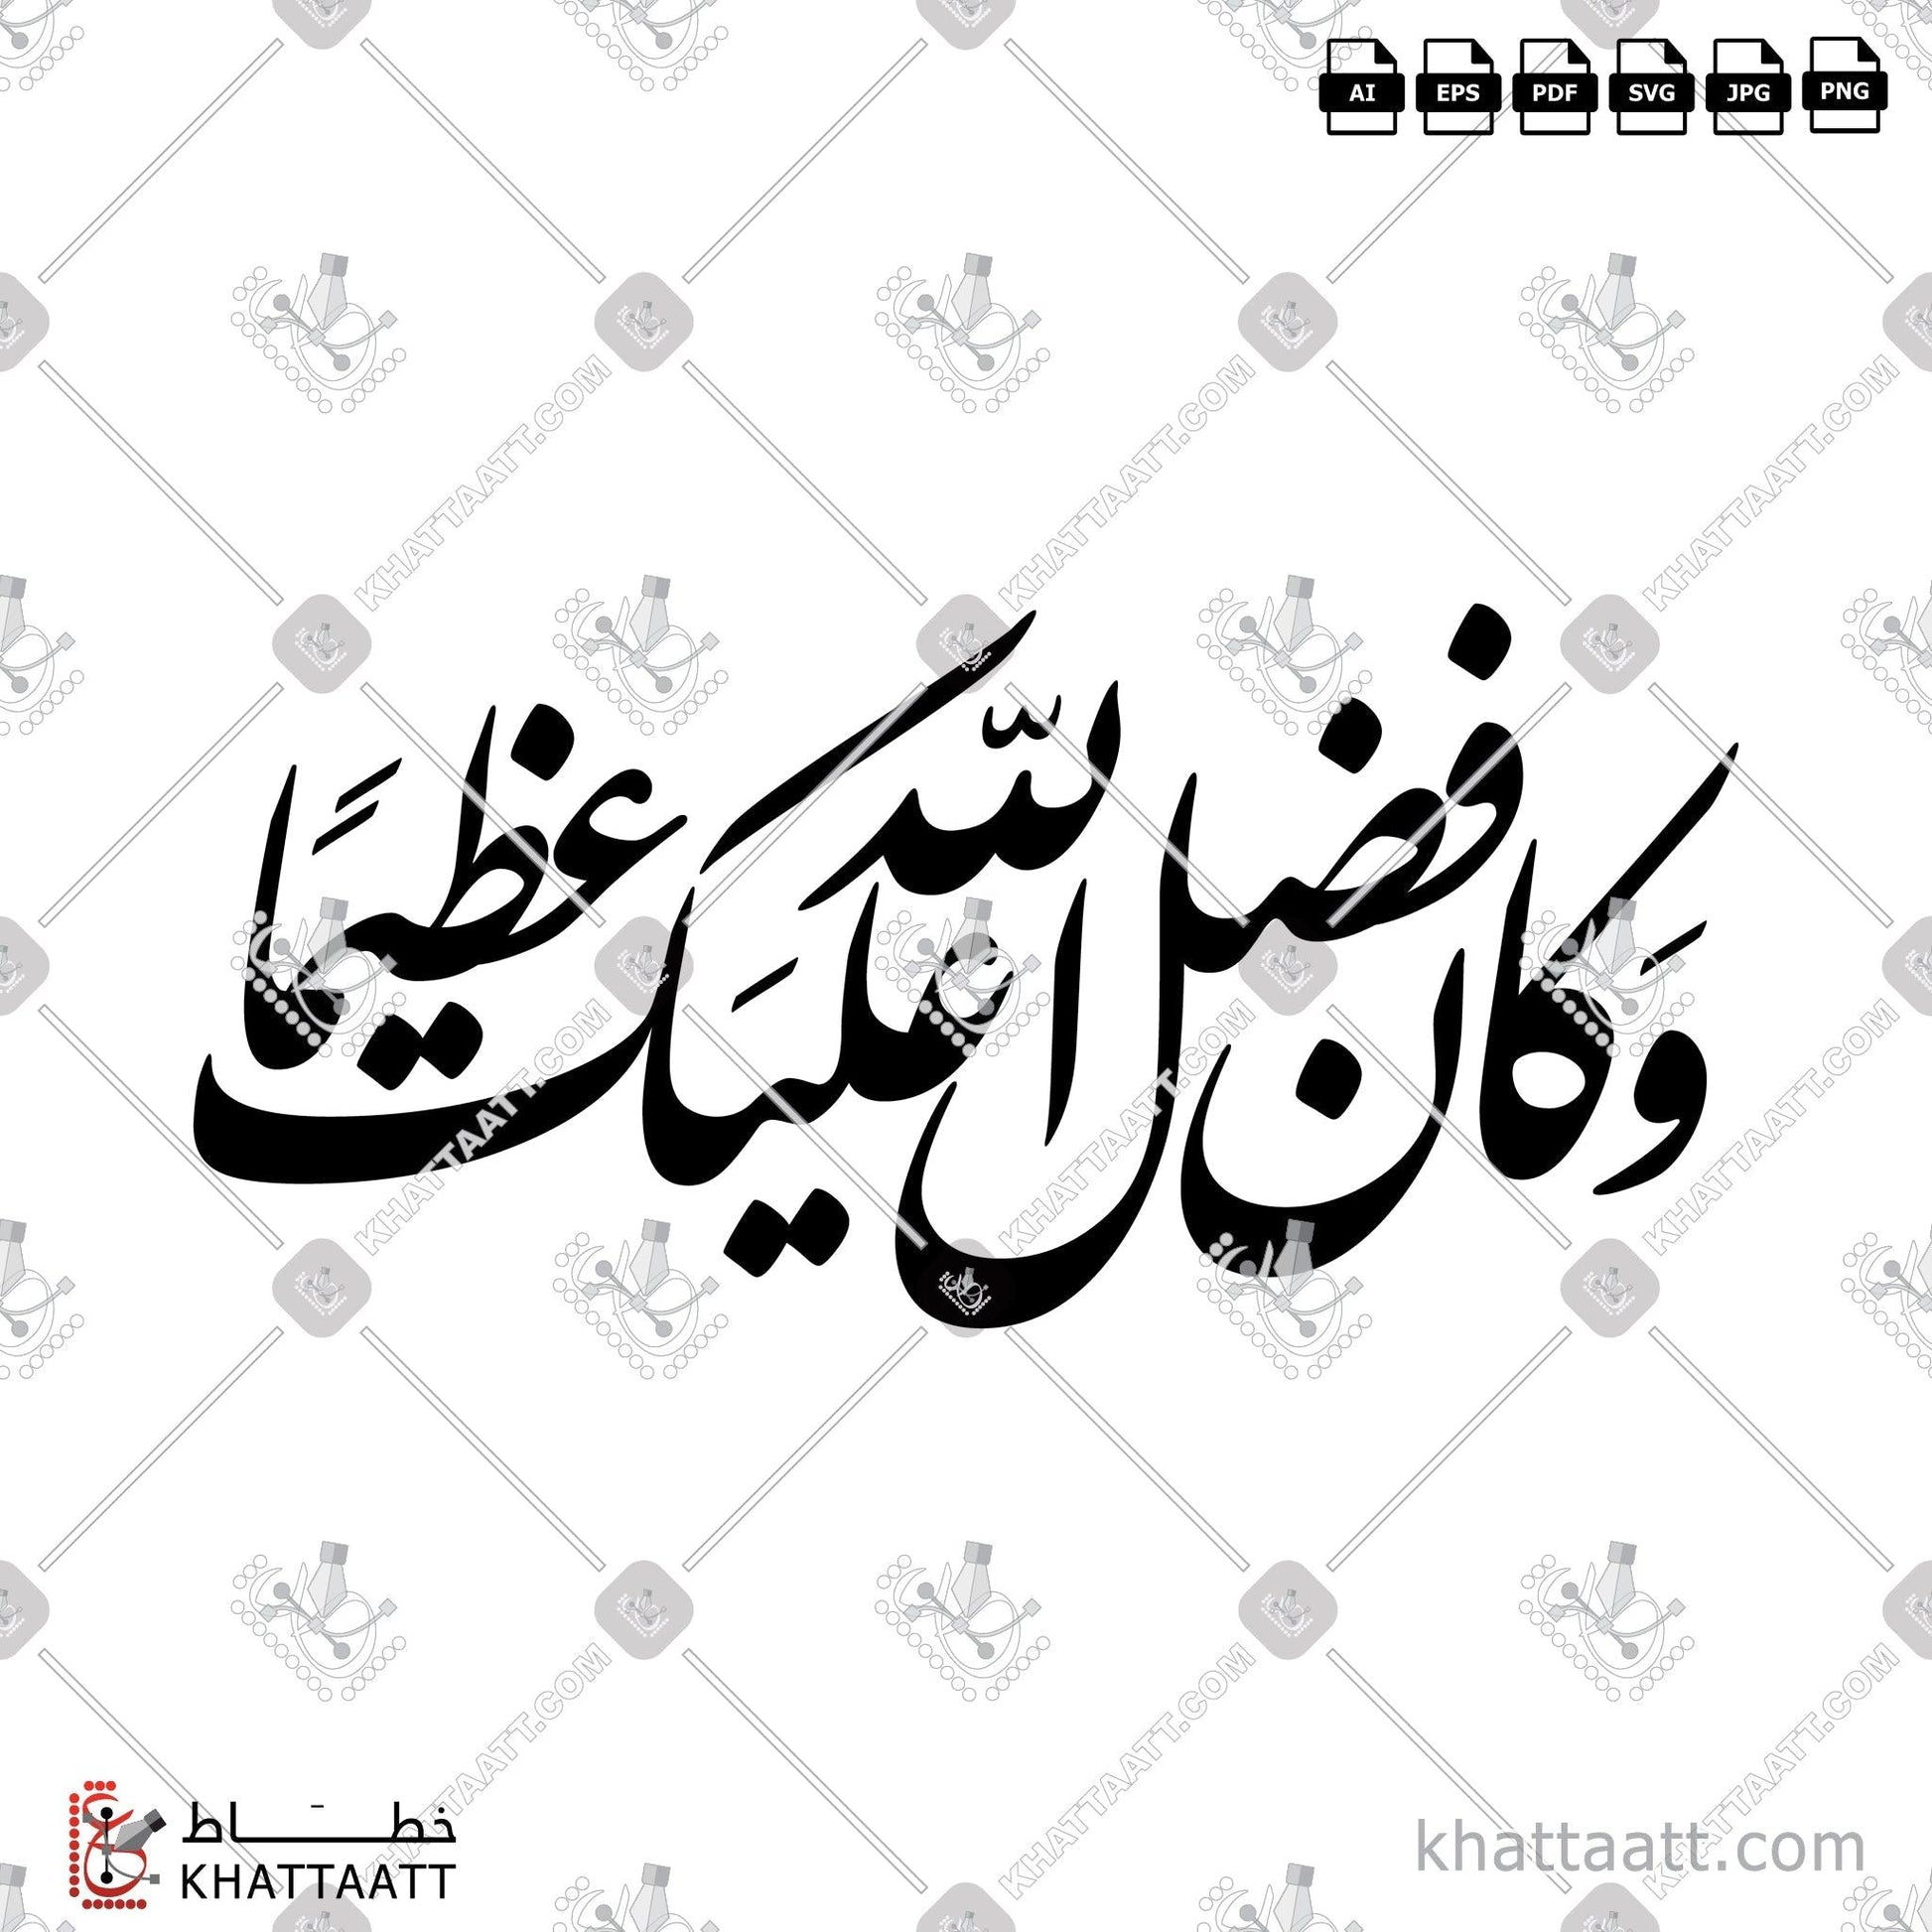 Download Arabic Calligraphy of وكان فضل الله عليك عظيما in Farsi - الخط الفارسي in vector and .png